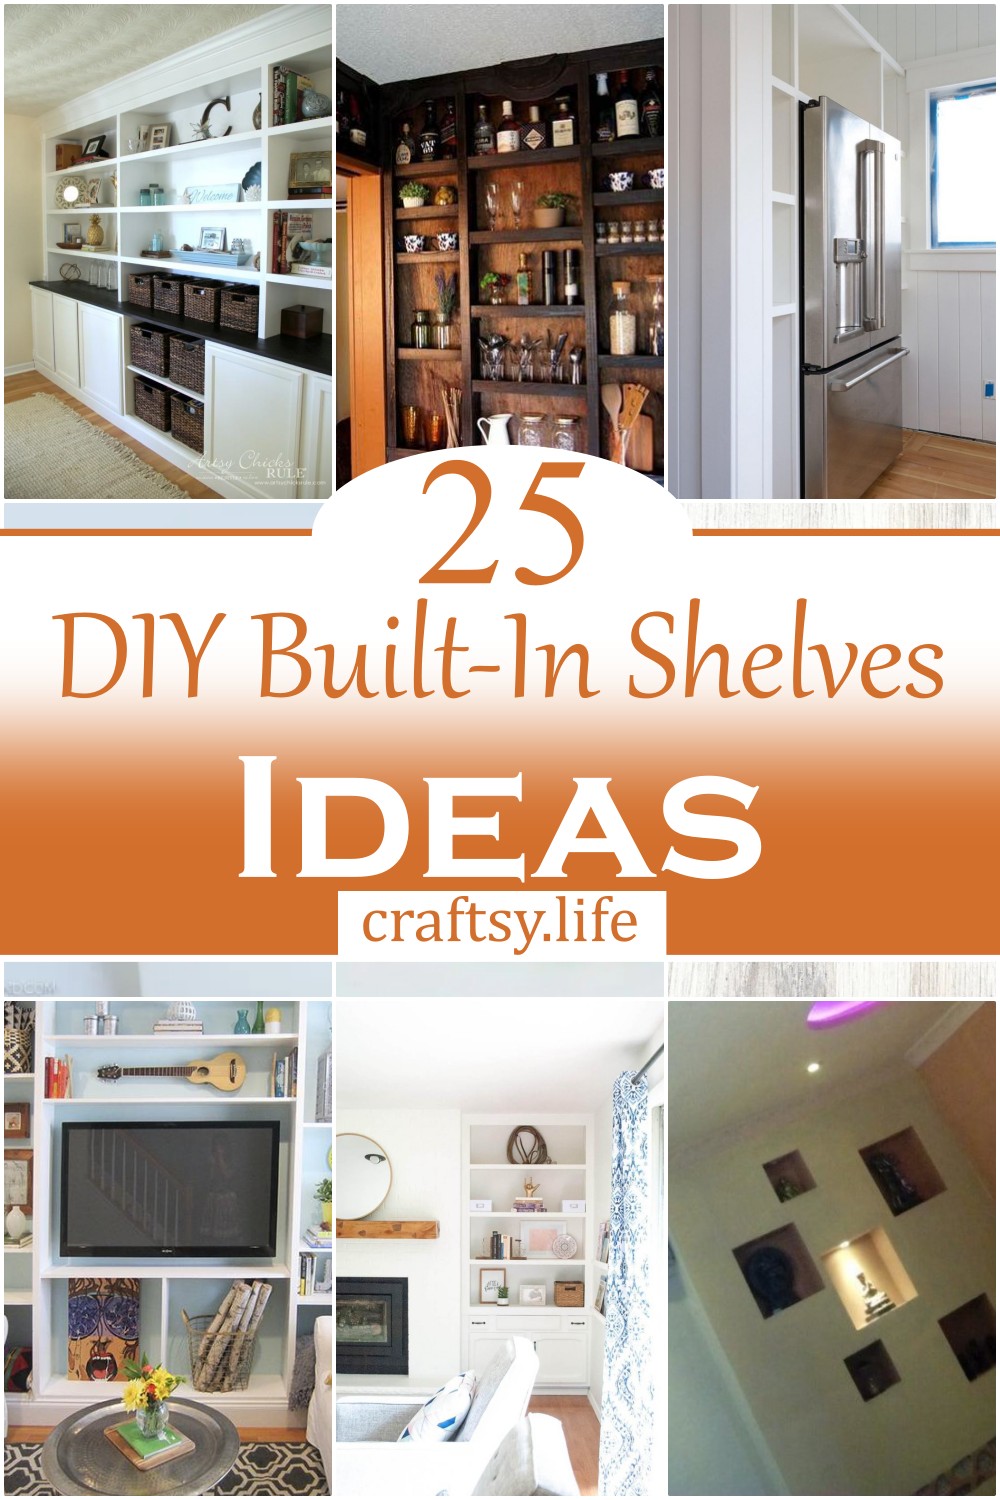 DIY Built-In Shelves Ideas